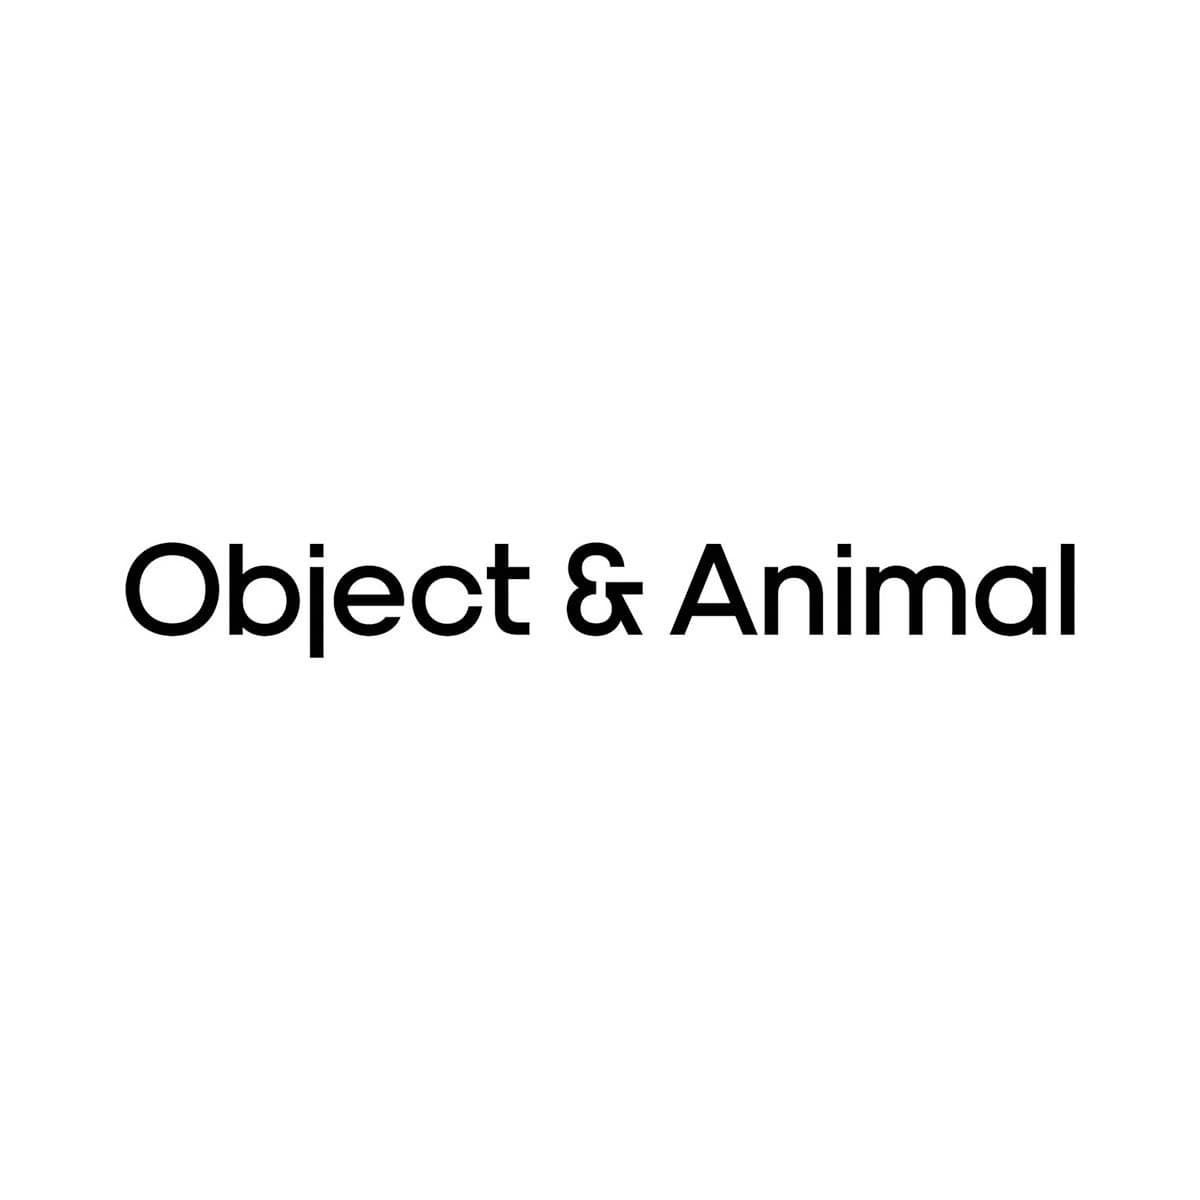 Object & Animal